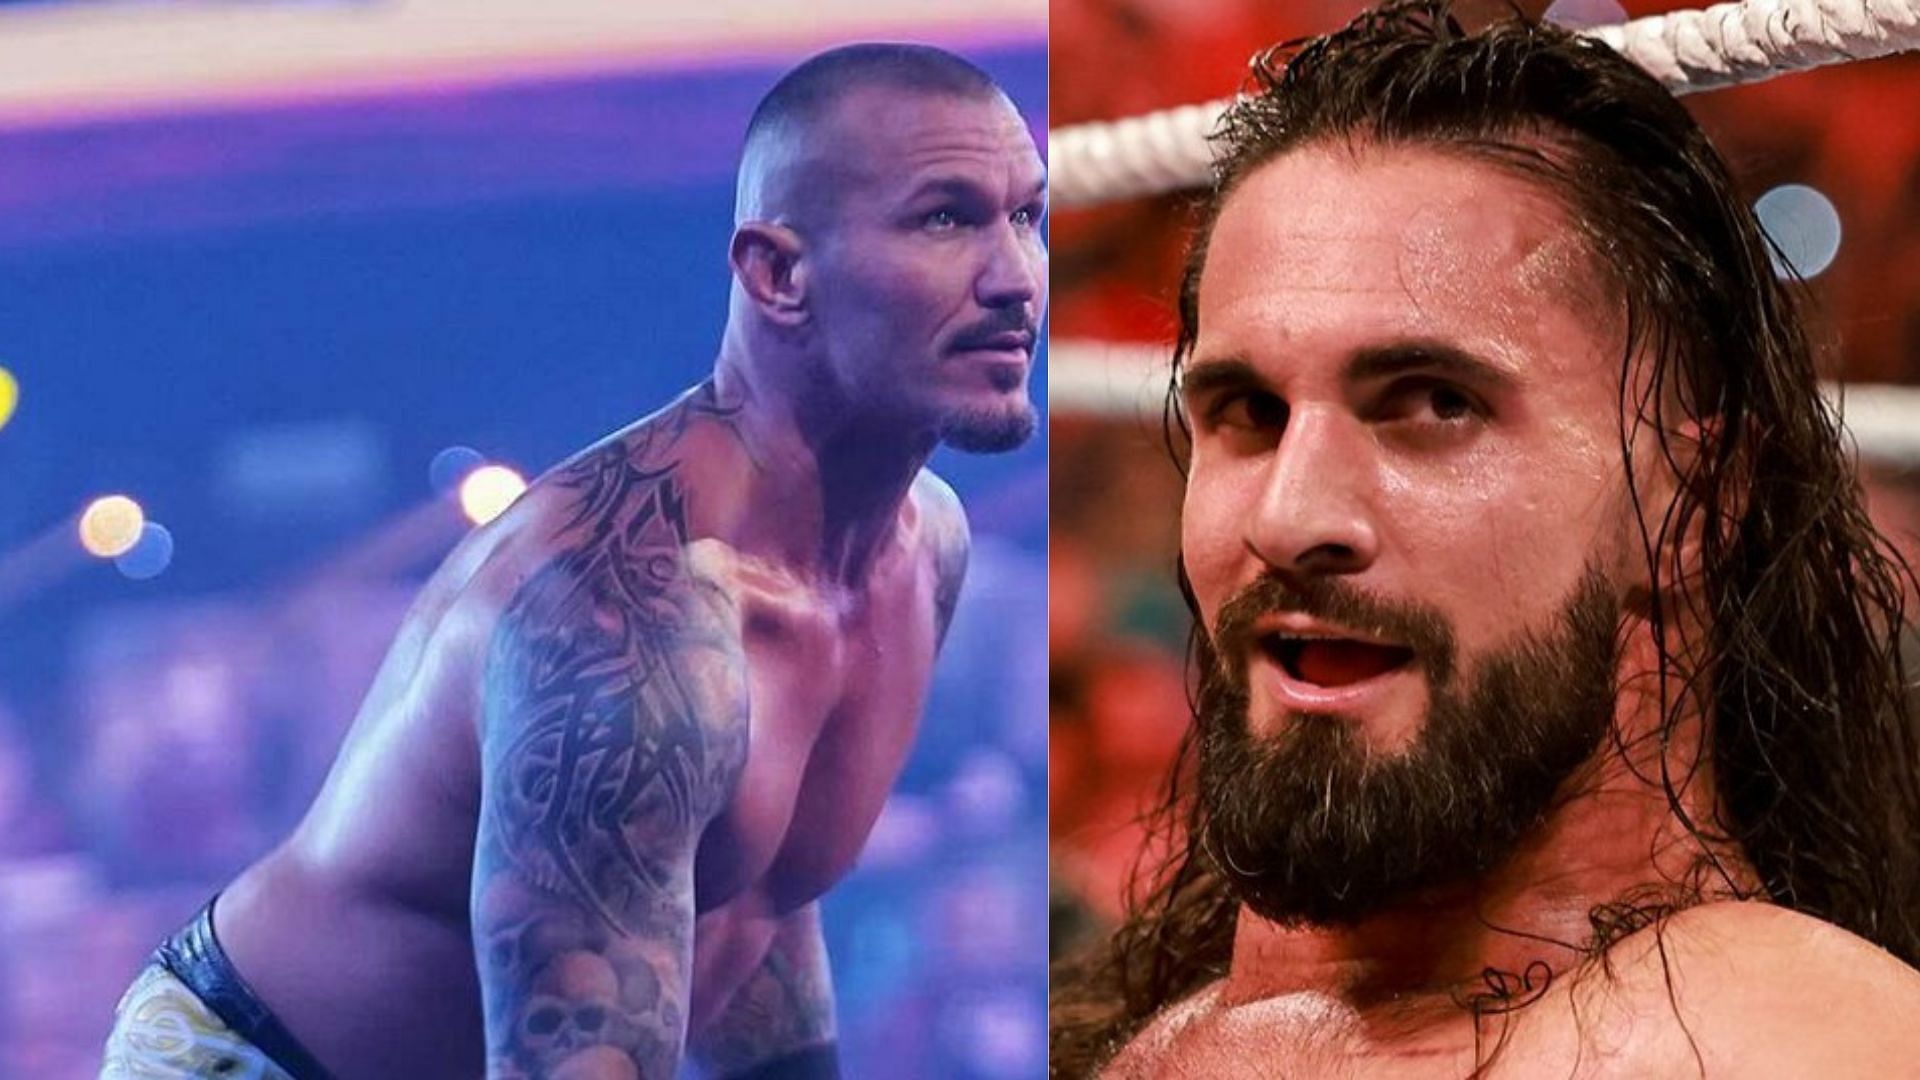 Will Randy Orton return to face Seth Rollins?